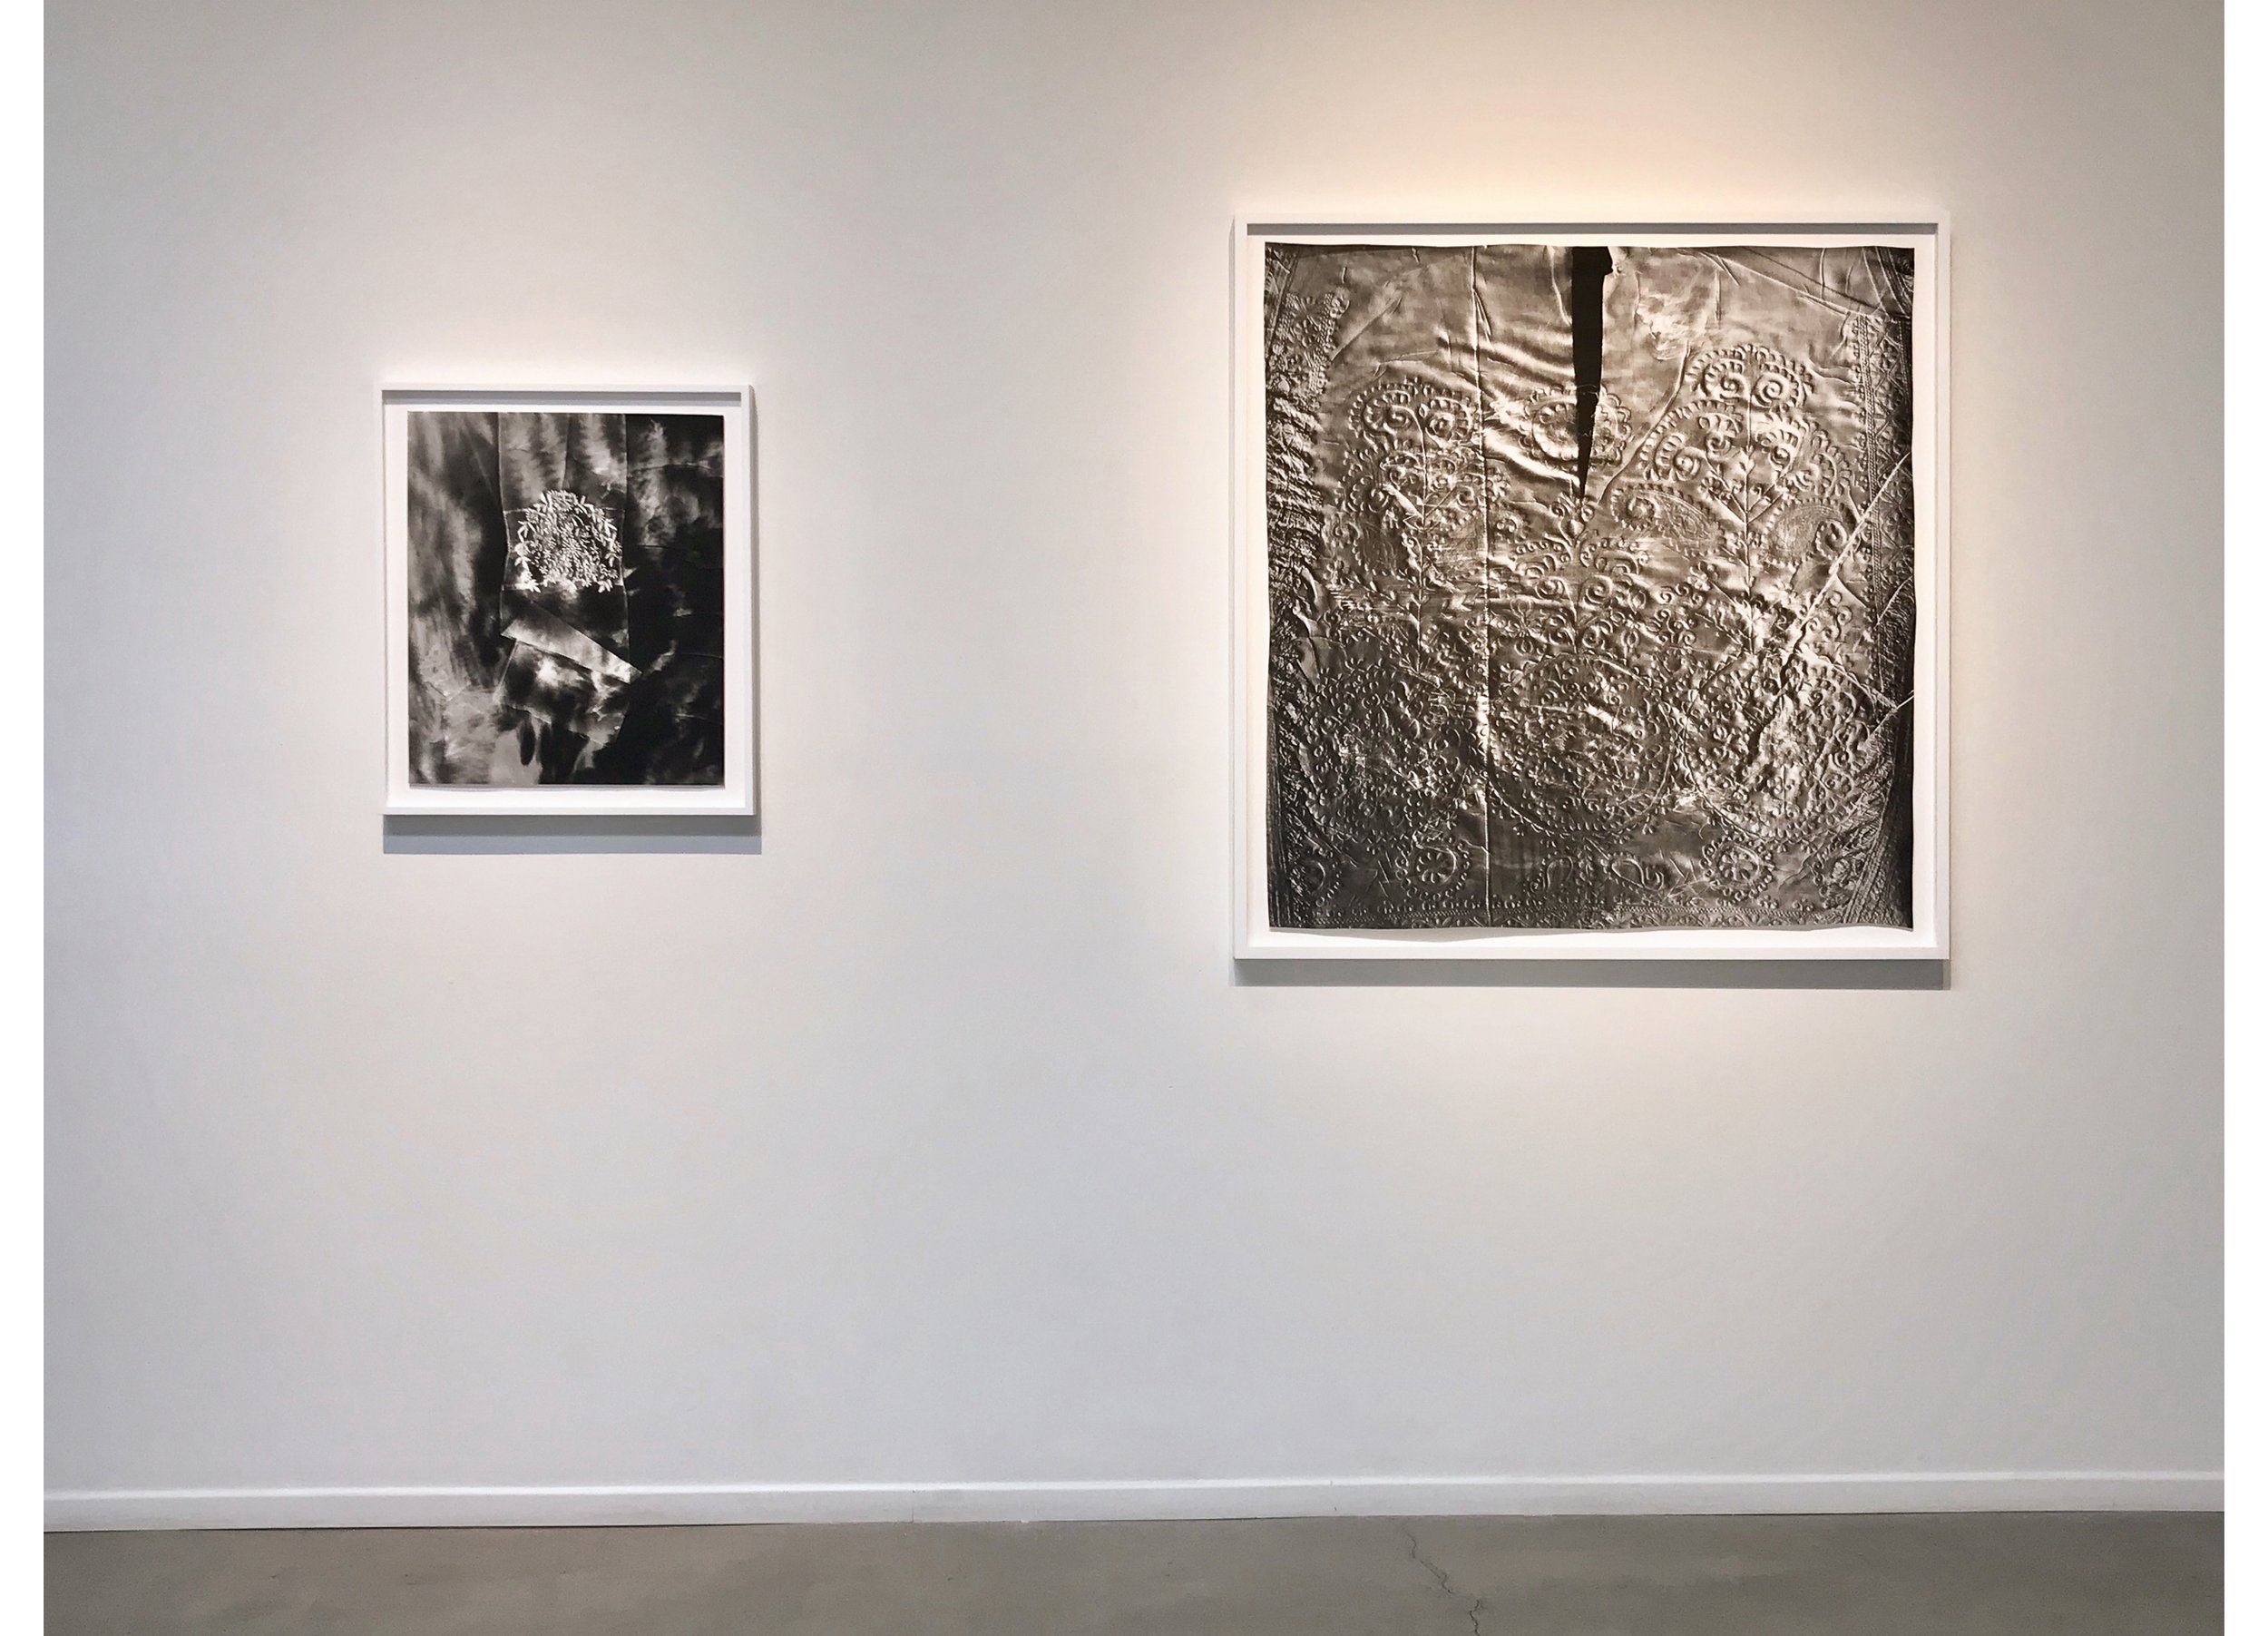  Installation view of  Generation,  solo exhibition at Von Lintel Gallery, 2018 